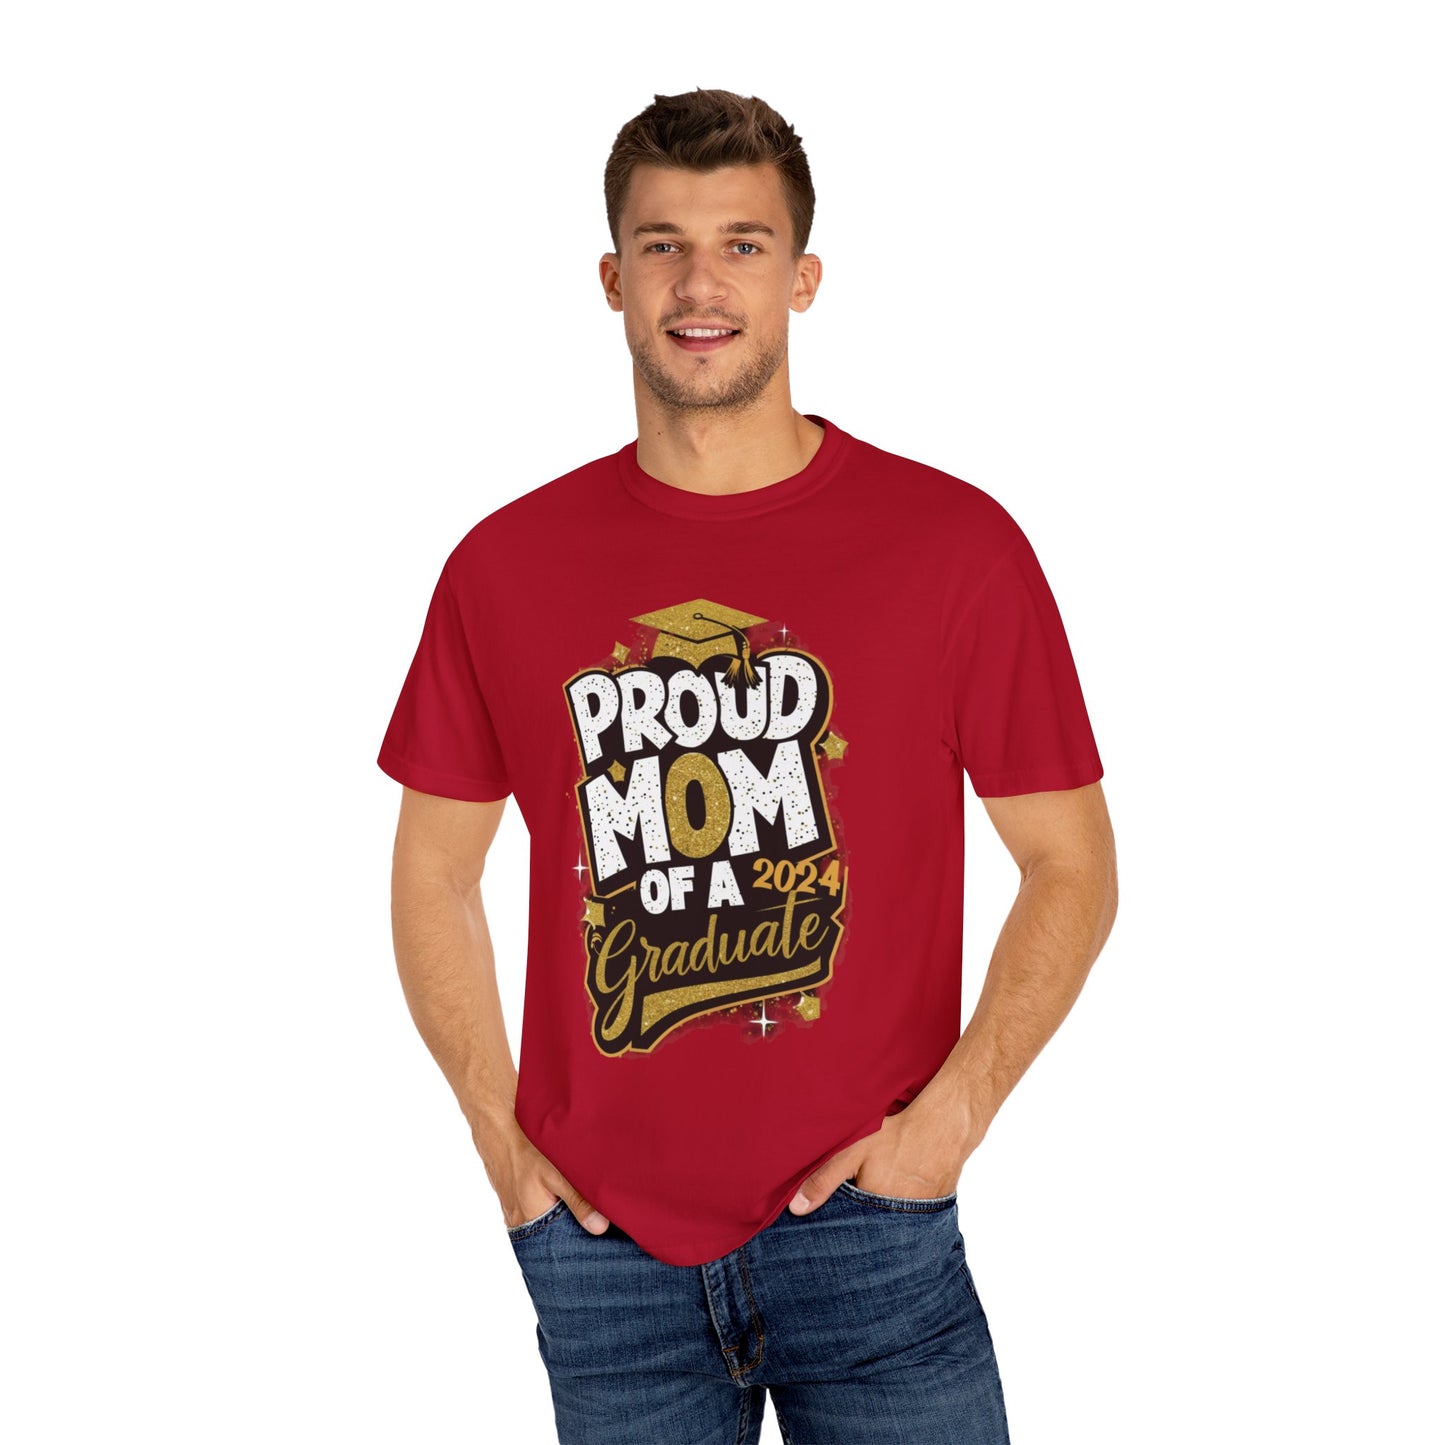 Proud Mom of a 2024 Graduate Unisex Garment-dyed T-shirt Cotton Funny Humorous Graphic Soft Premium Unisex Men Women Red T-shirt Birthday Gift-21